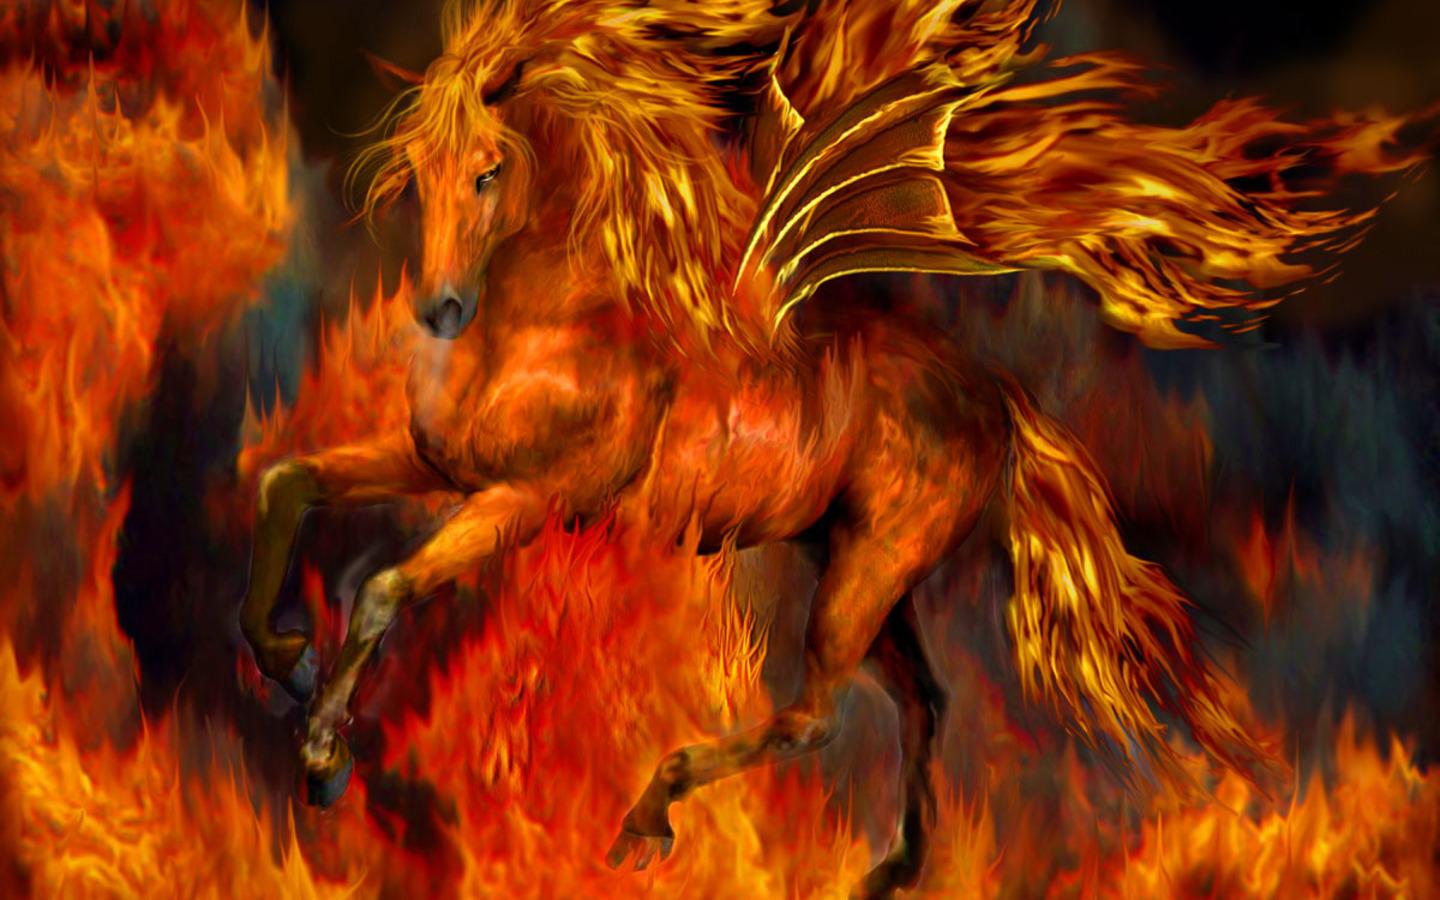 Fire Horse Wallpaper HD In Animals Imageci